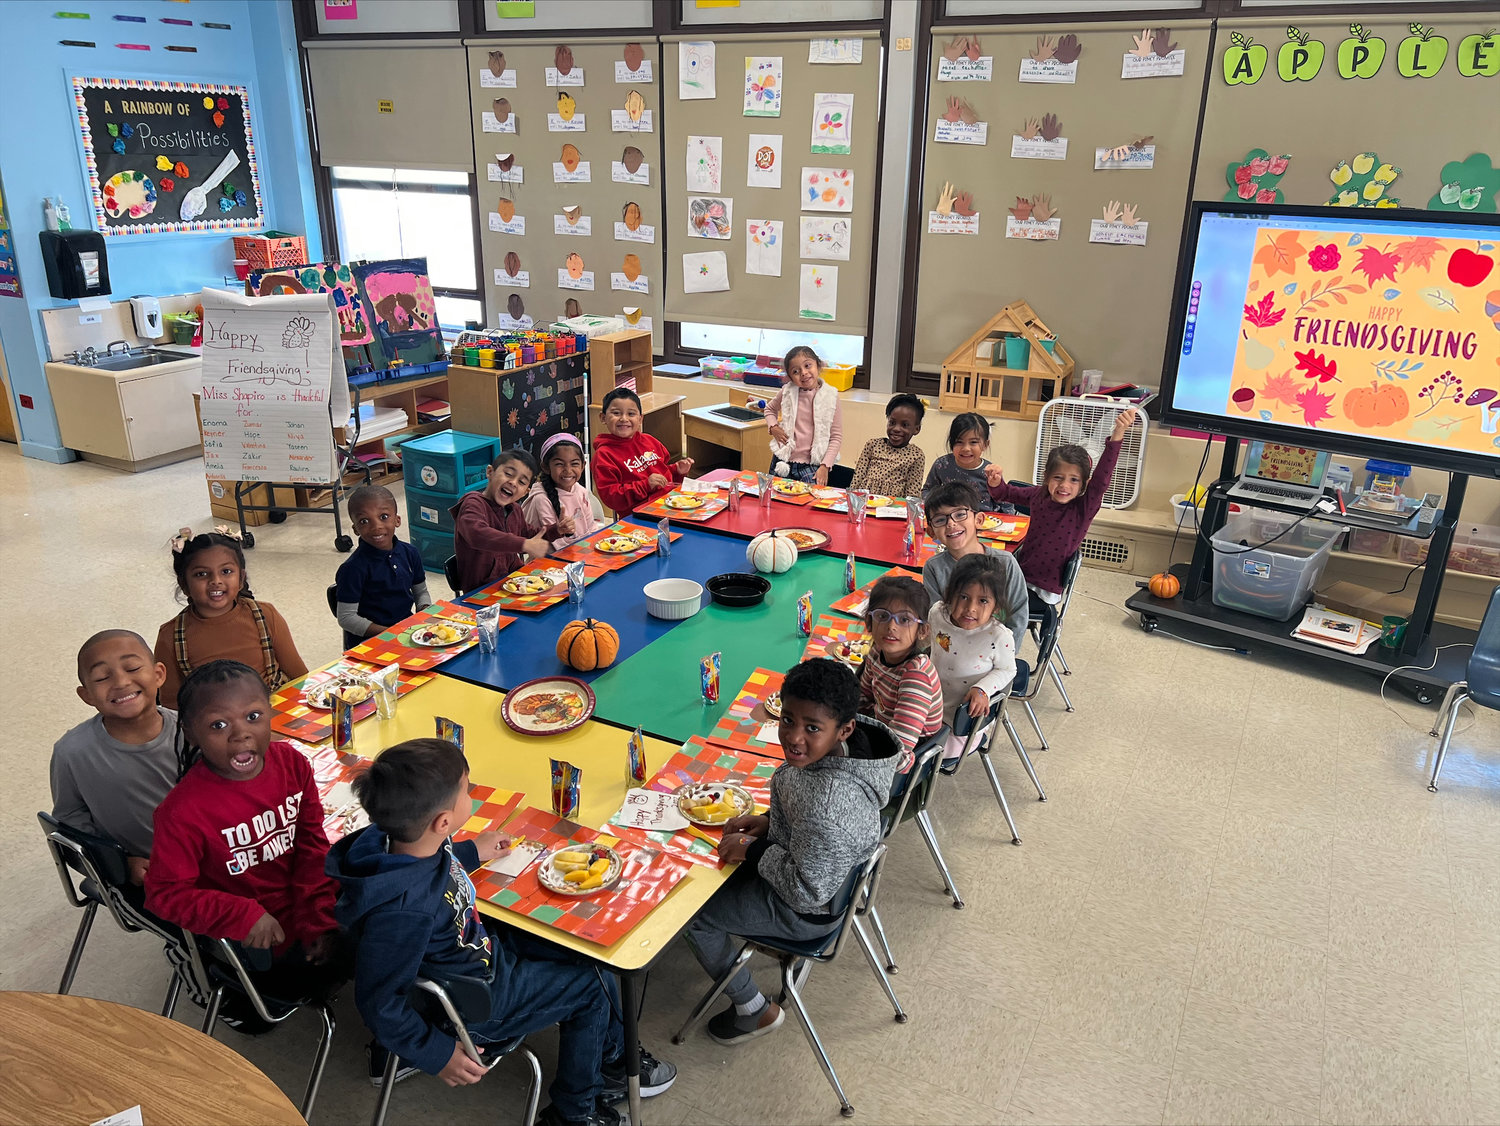 Robert W. Carbonaro Elementary School students enjoy a “Friendsgiving Feast.”